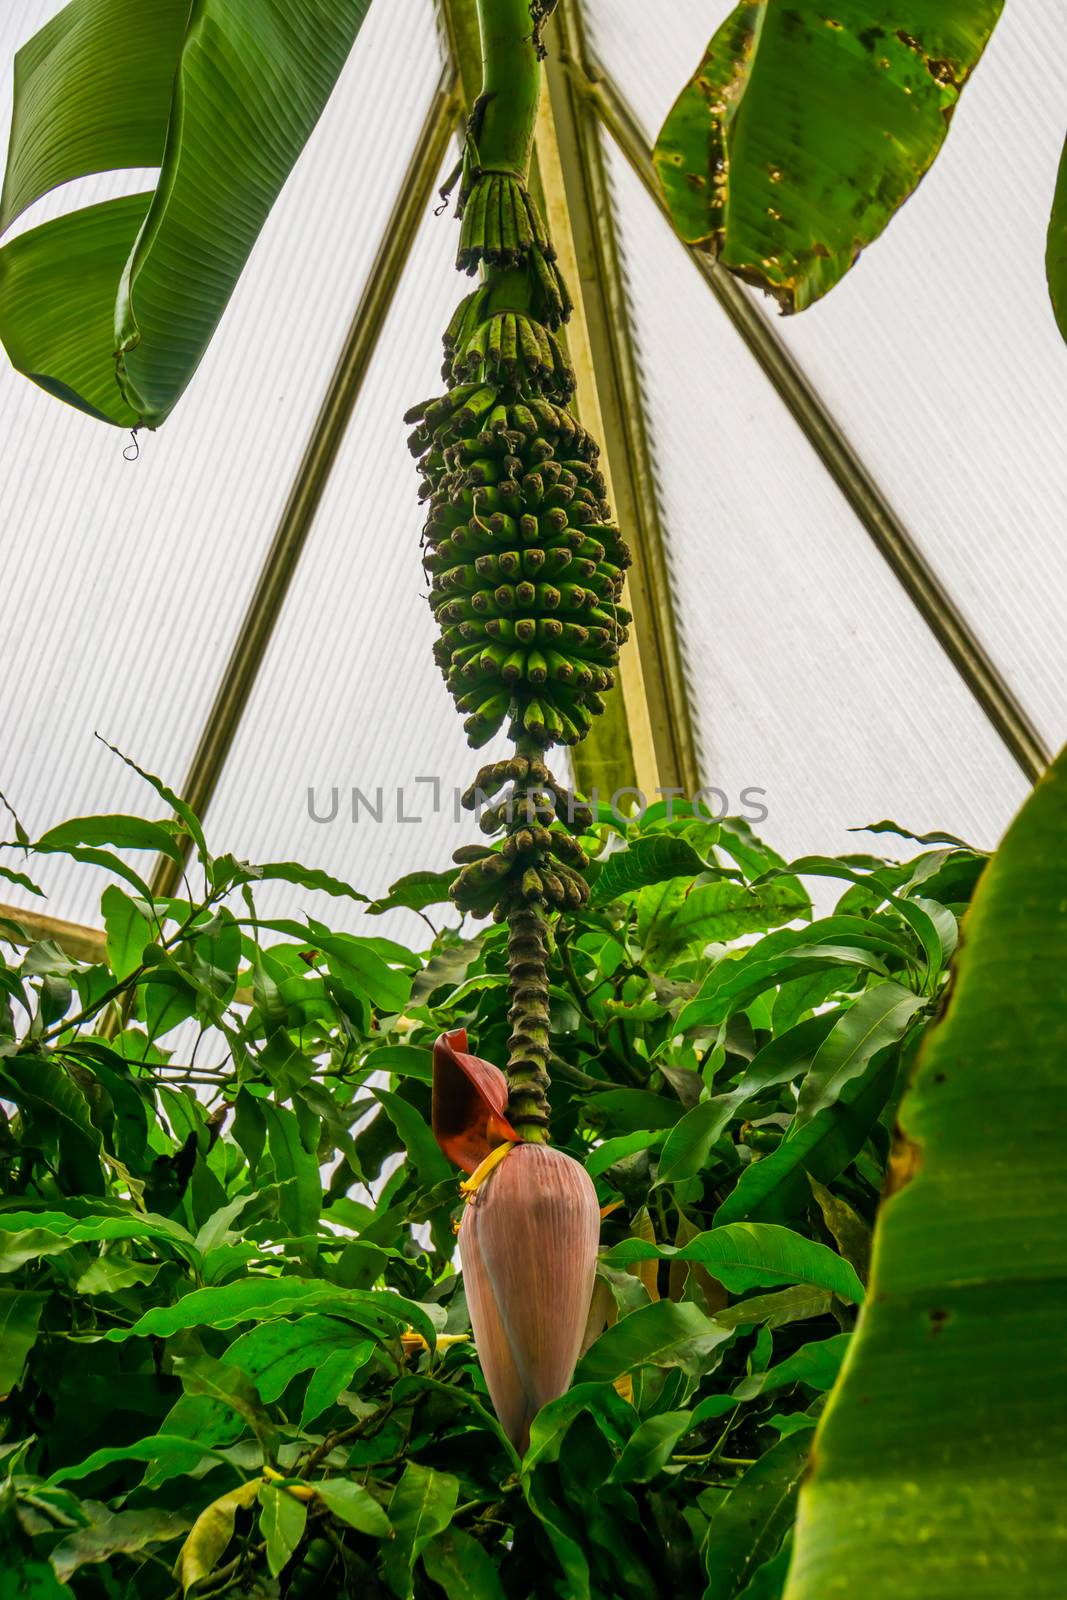 flower bud with banana bunch, Banana plant, tropical plant specie by charlottebleijenberg